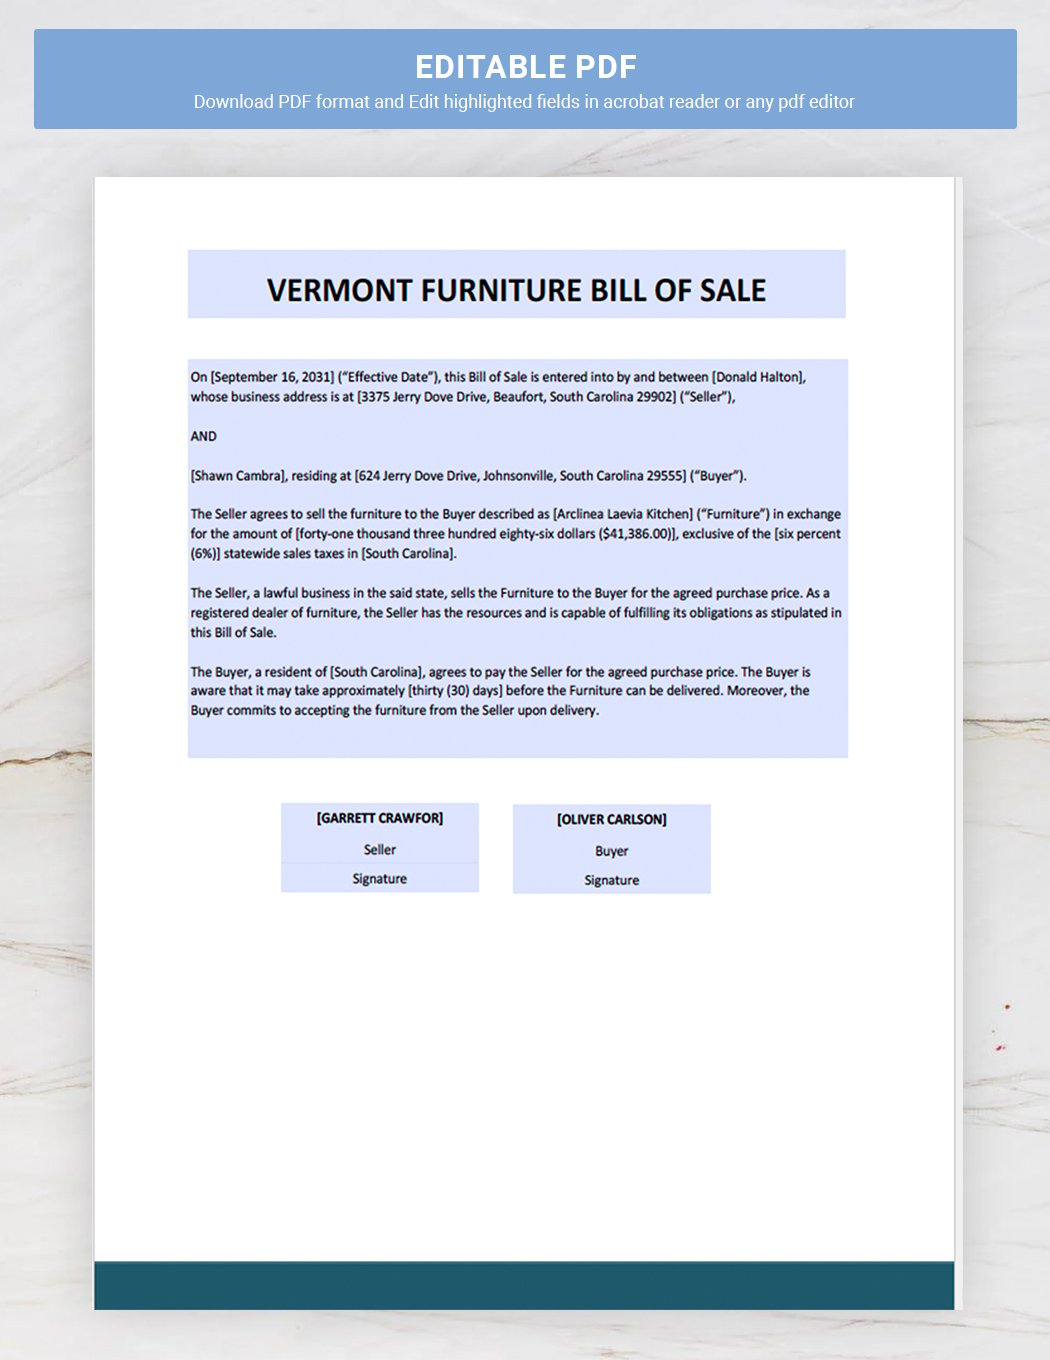 Vermont Furniture Bill of Sale Template